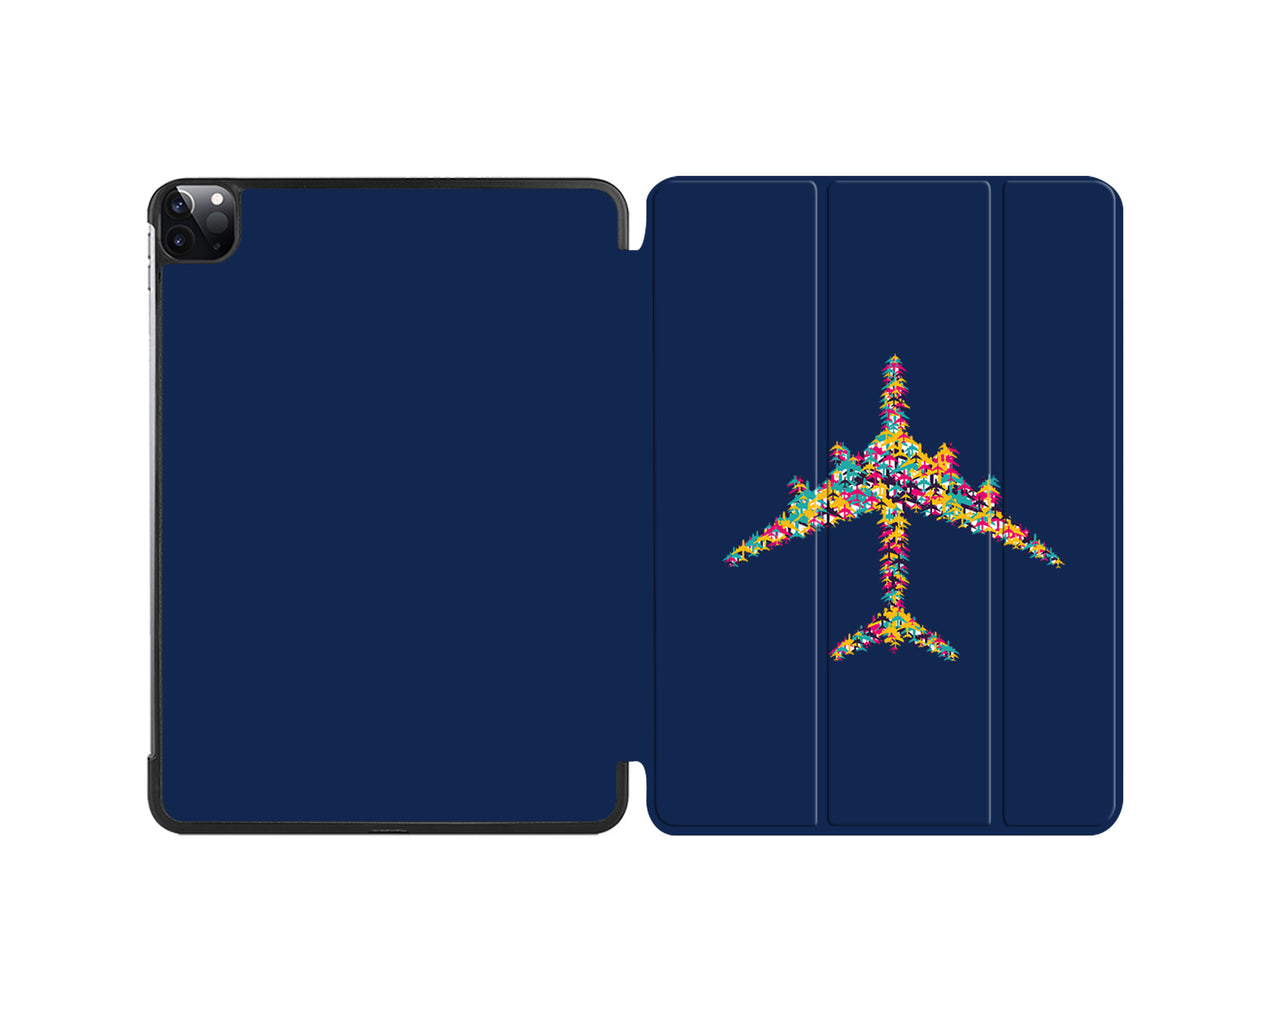 Colourful Airplane Designed iPad Cases